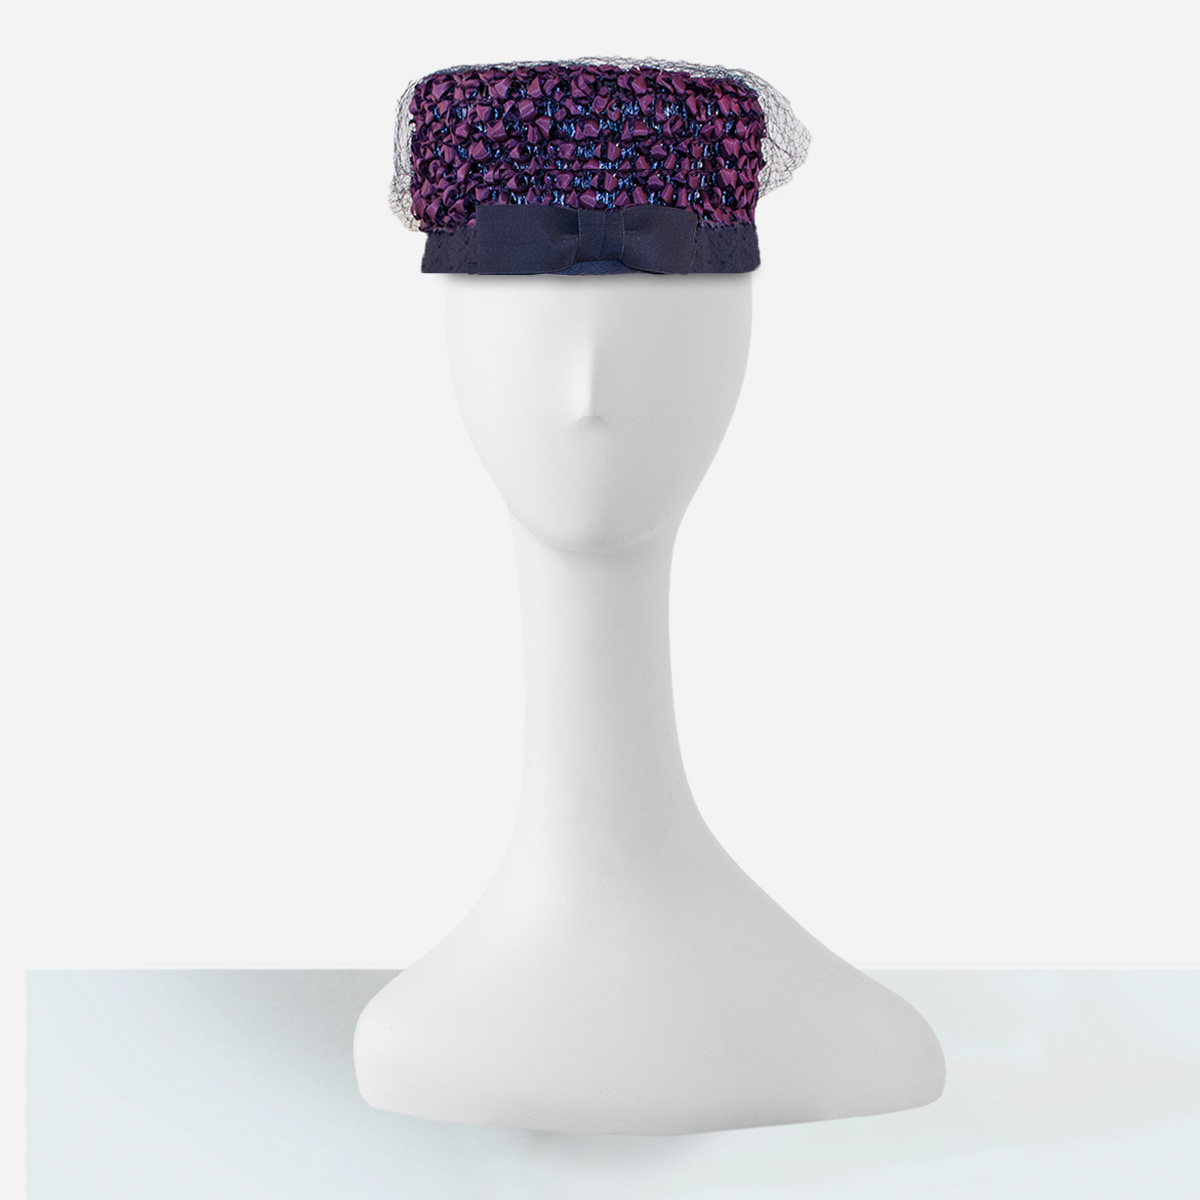 Purple pillbox hat